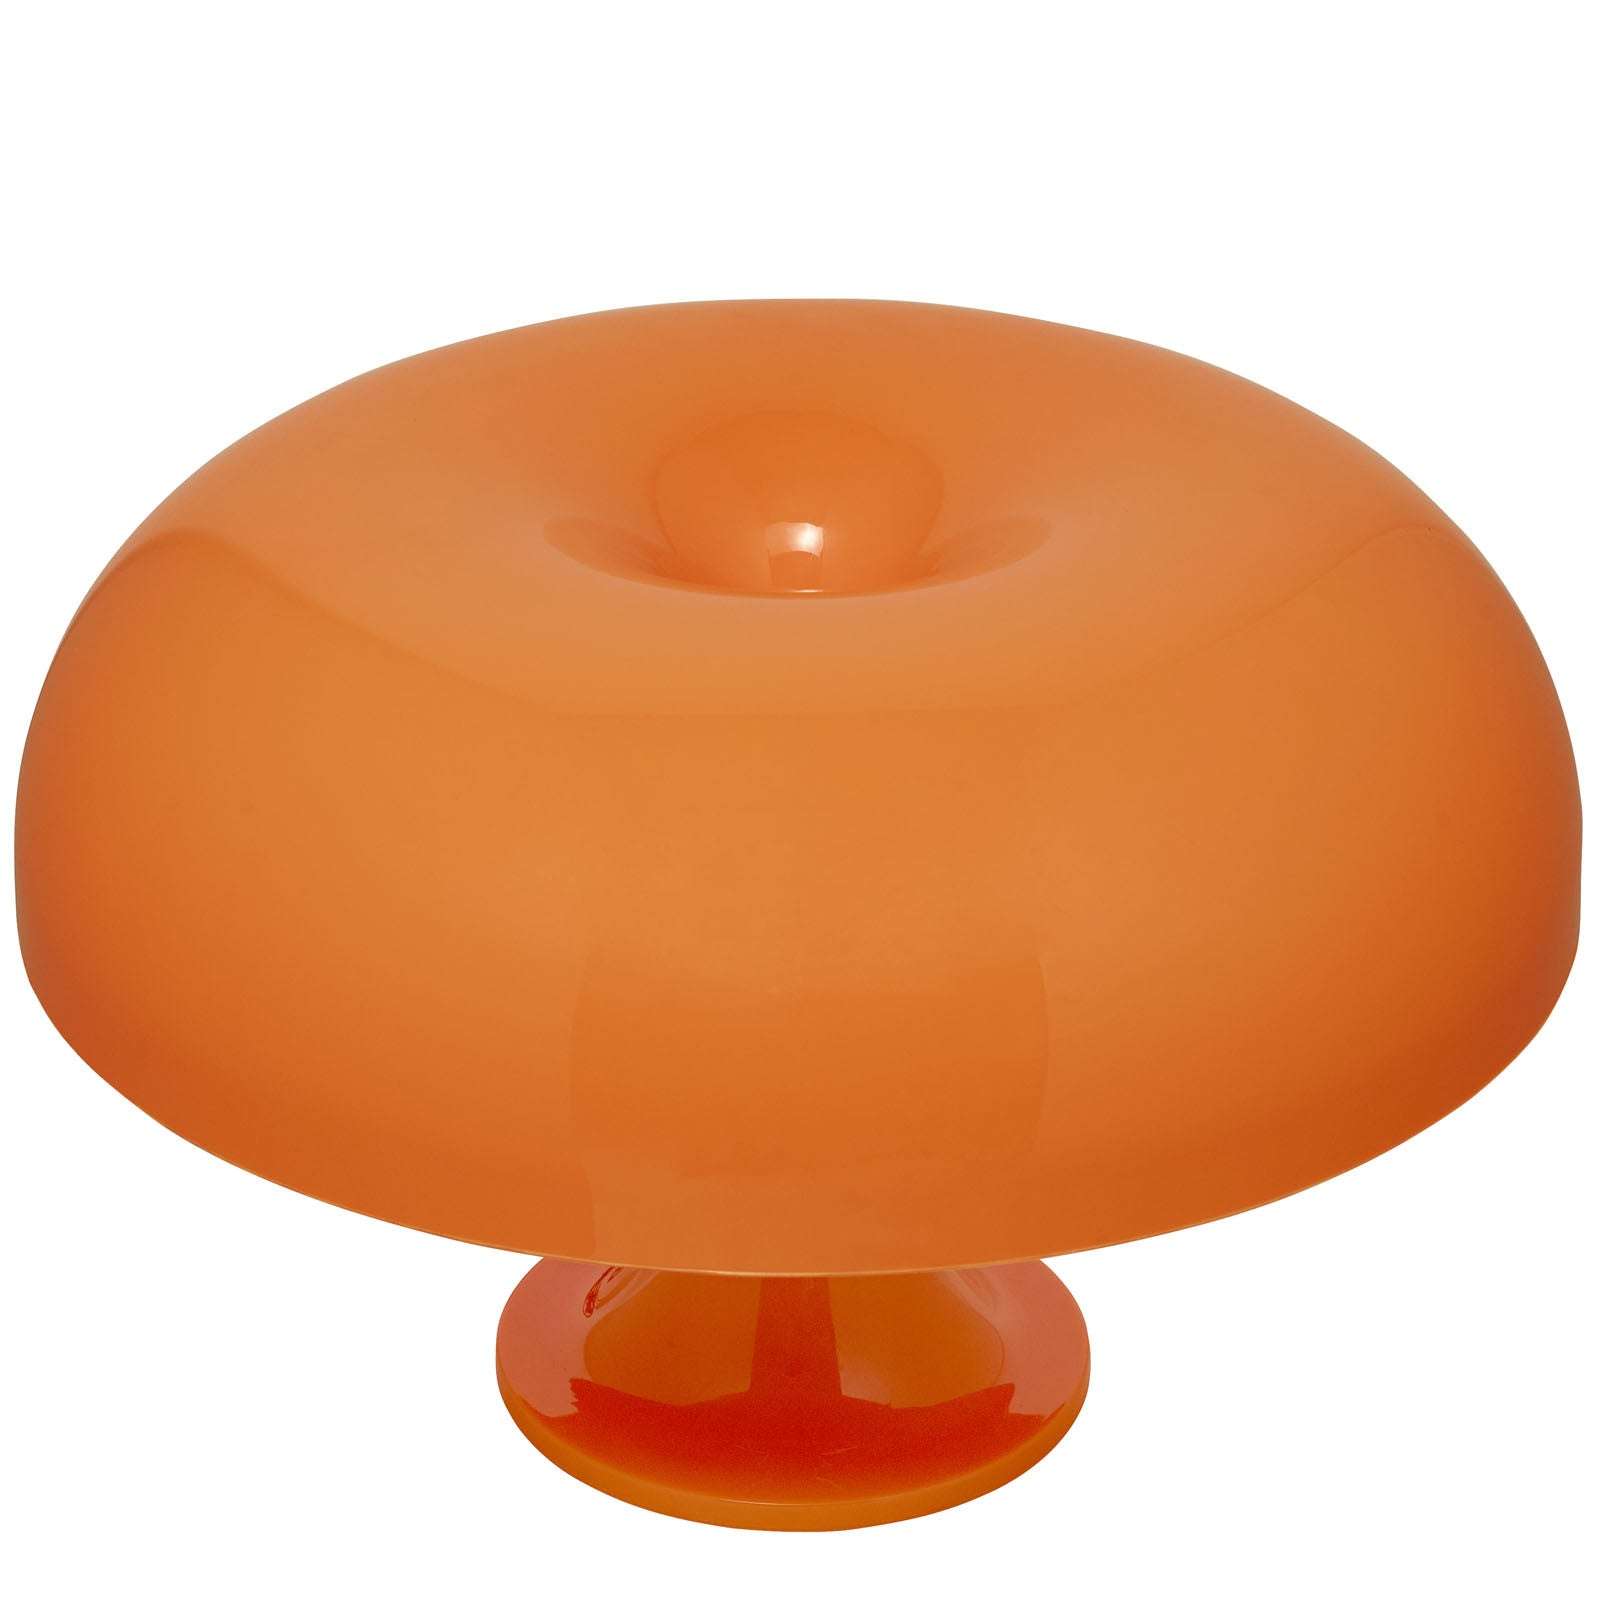 Plaza Acrylic Table Lamp Orange